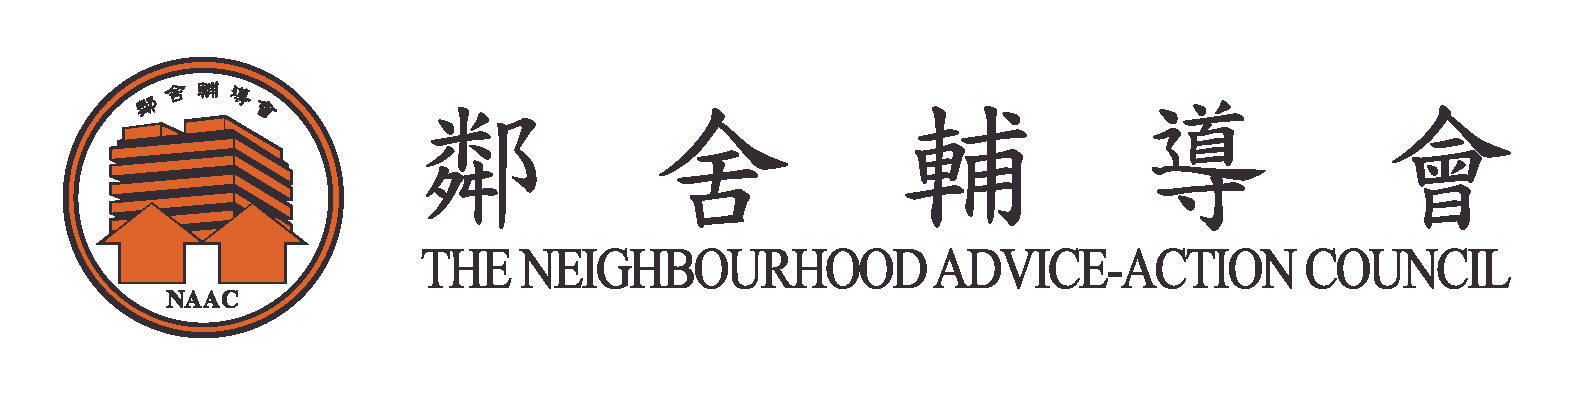 The Neighbourhood Advice-Action Council 鄰舍輔導會